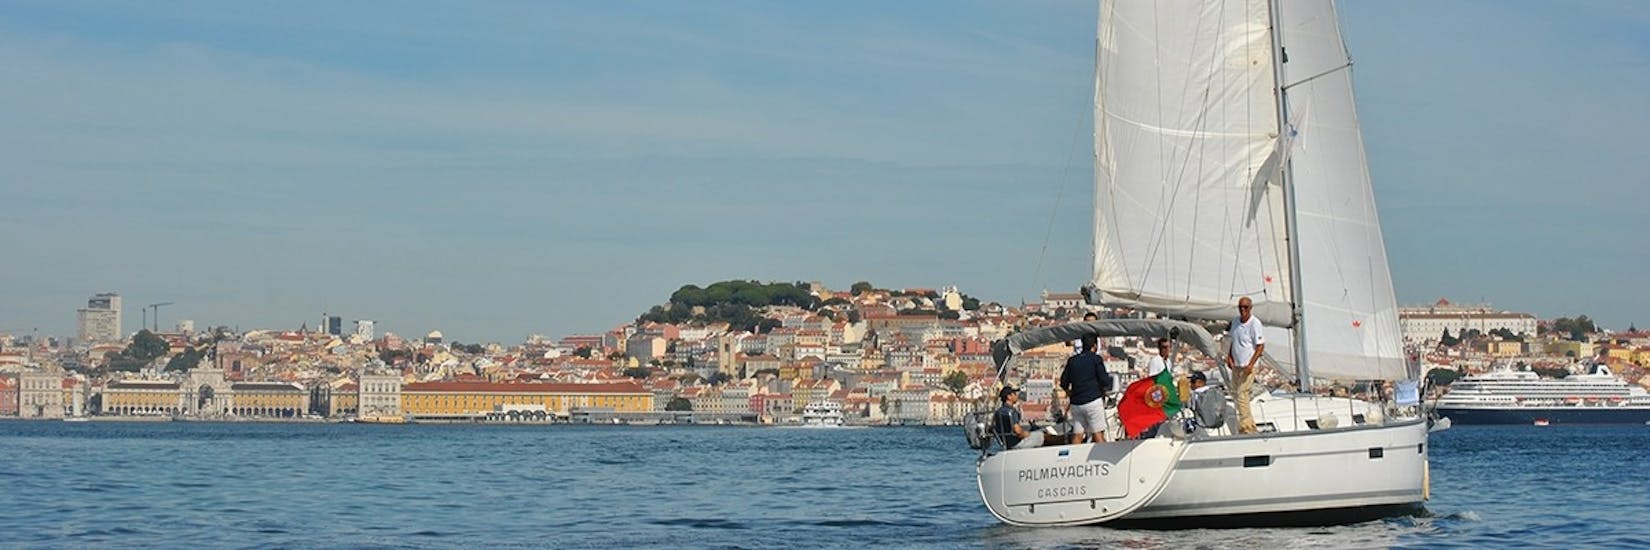 Gita privata in barca a vela da Doca de Belém a Tago con visita turistica.